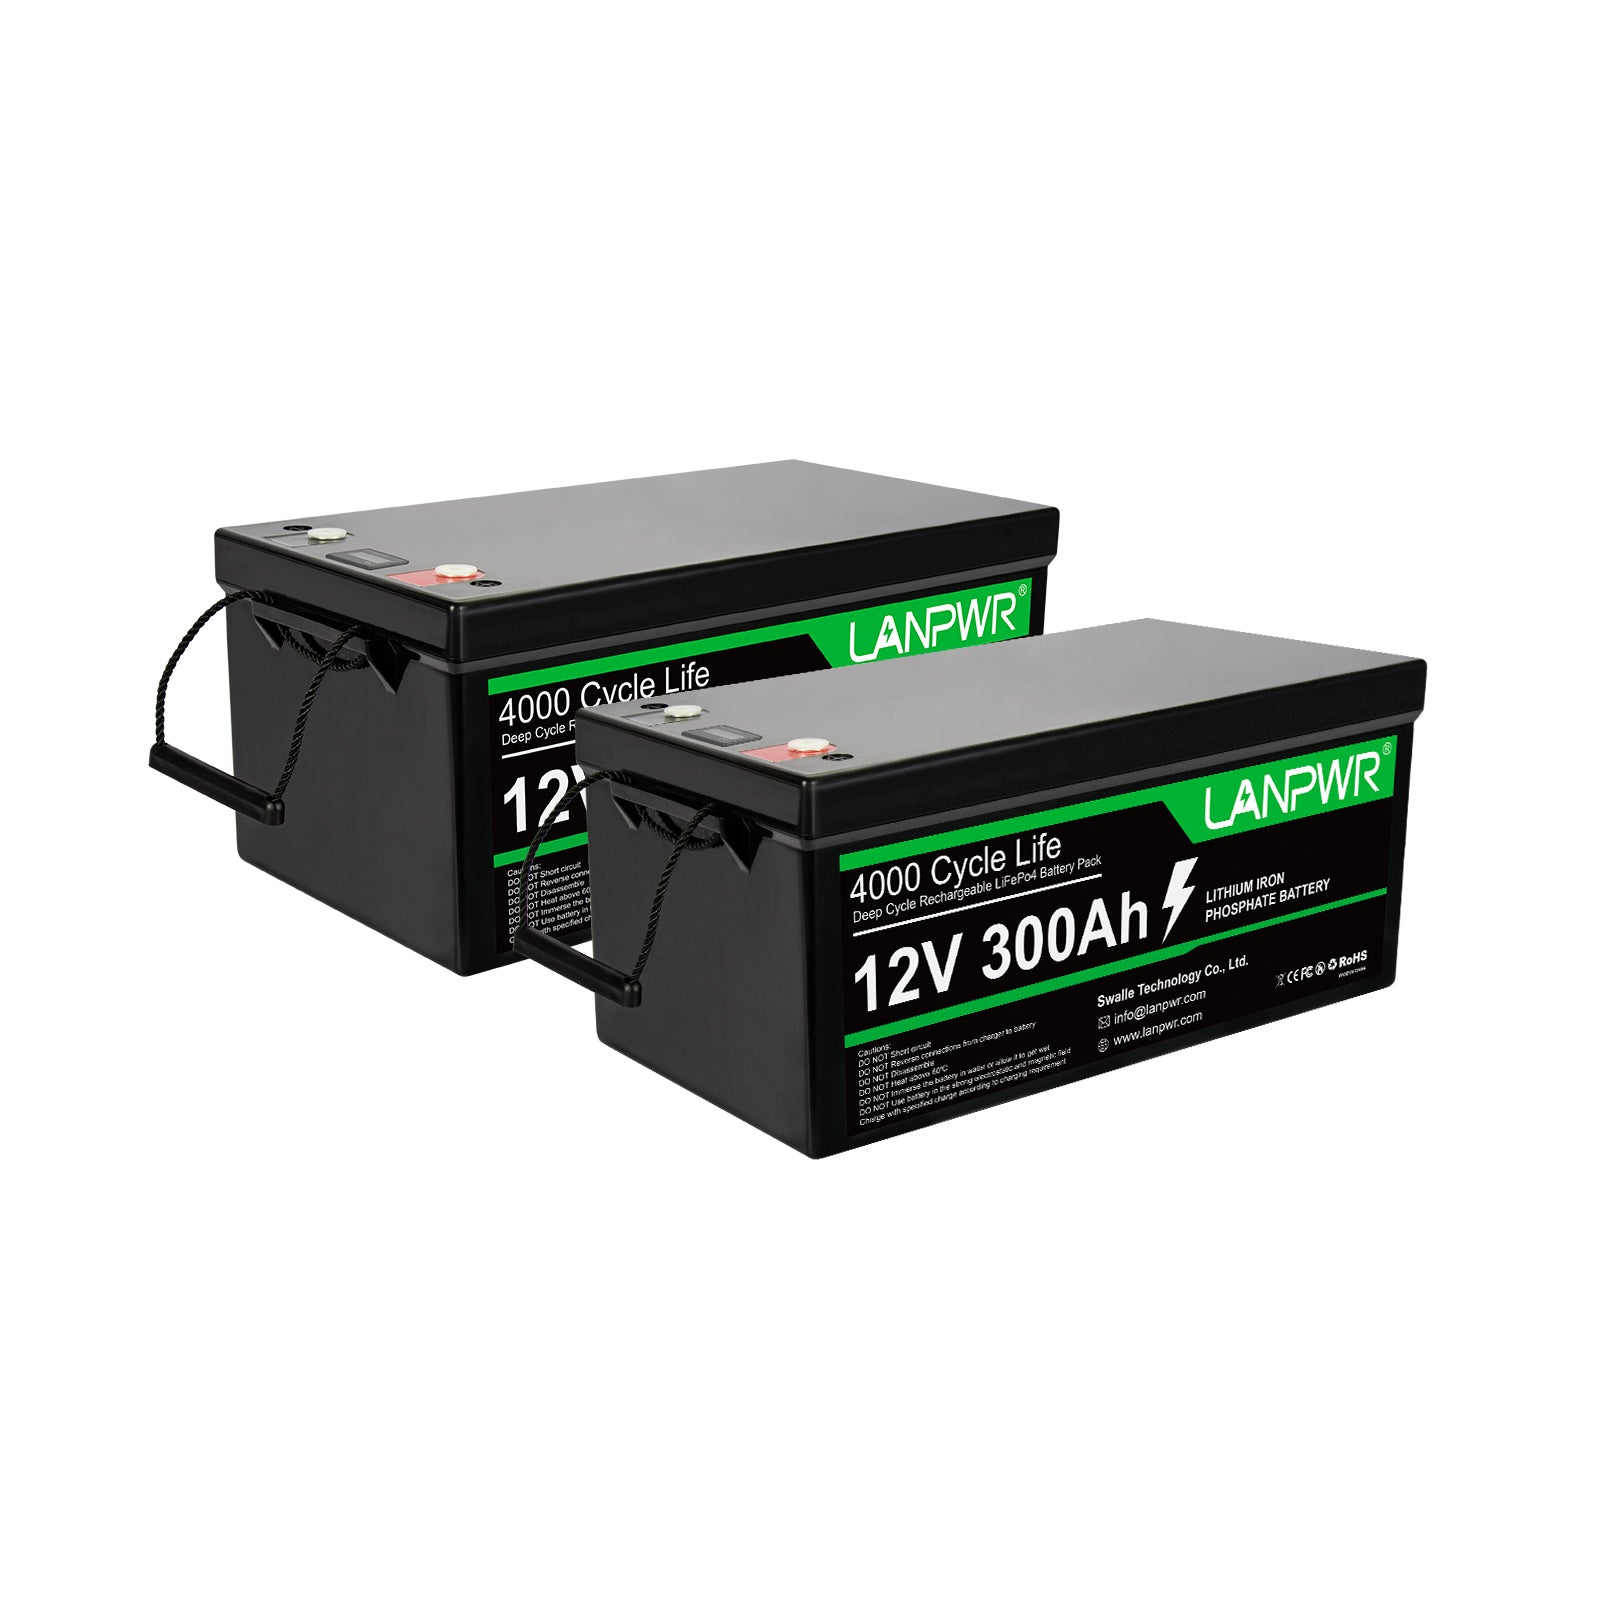 LANPWR 12V 300Ah LiFePO4 Battery, Maximum Load Power 2560W, 3840Wh Energy